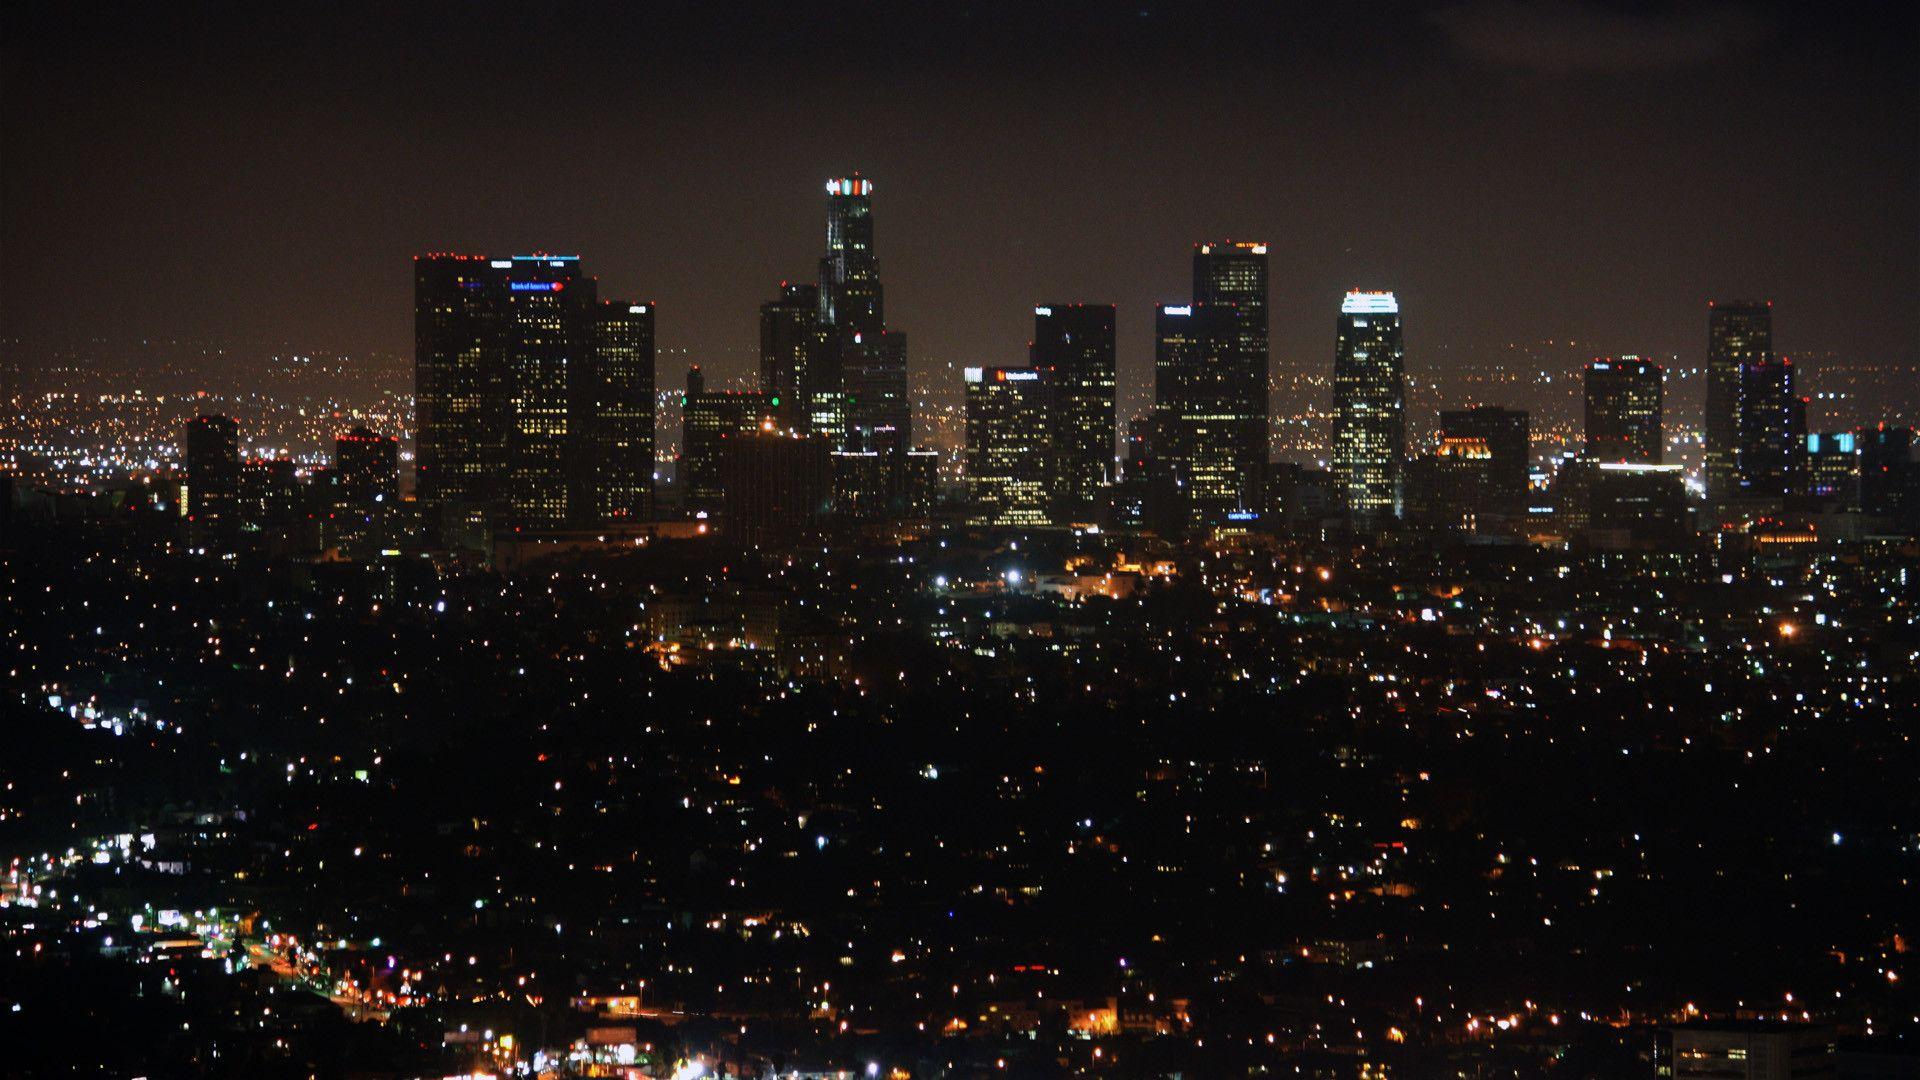 Los Angeles  Downtown Skyline at Night  Los Angeles Wallpaper 40392674   Fanpop